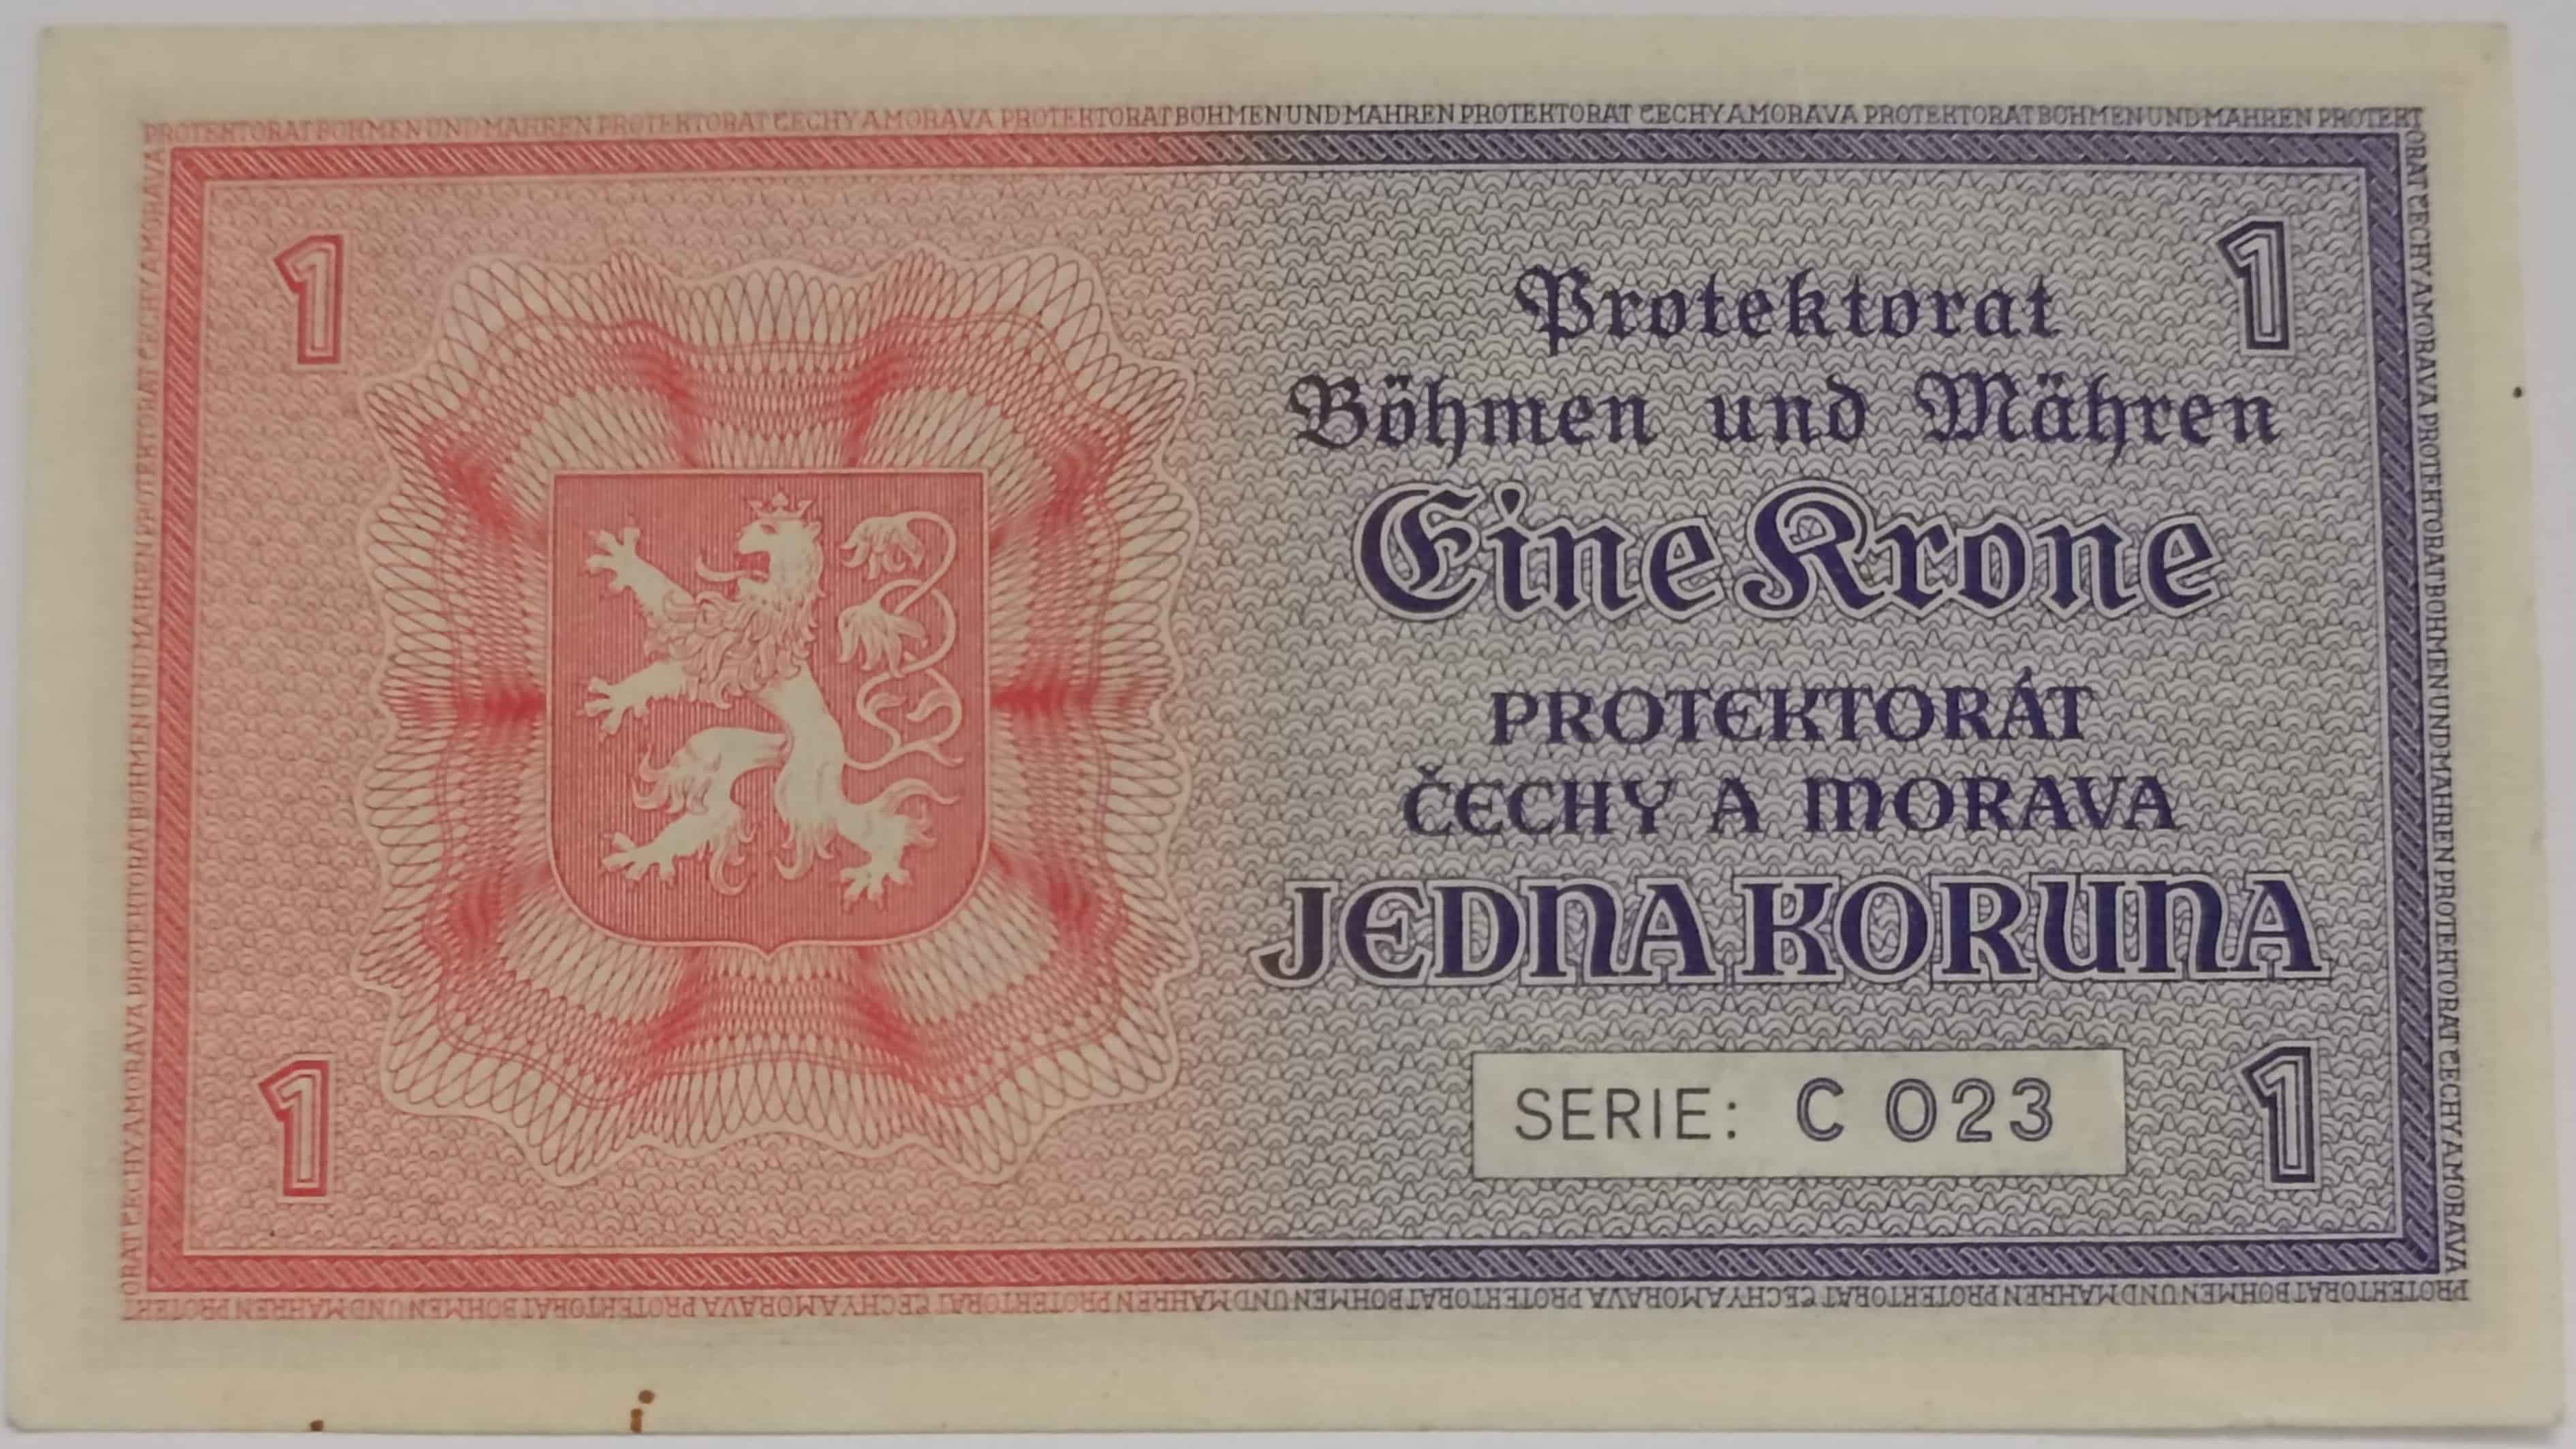 1 koruna 1940 C023